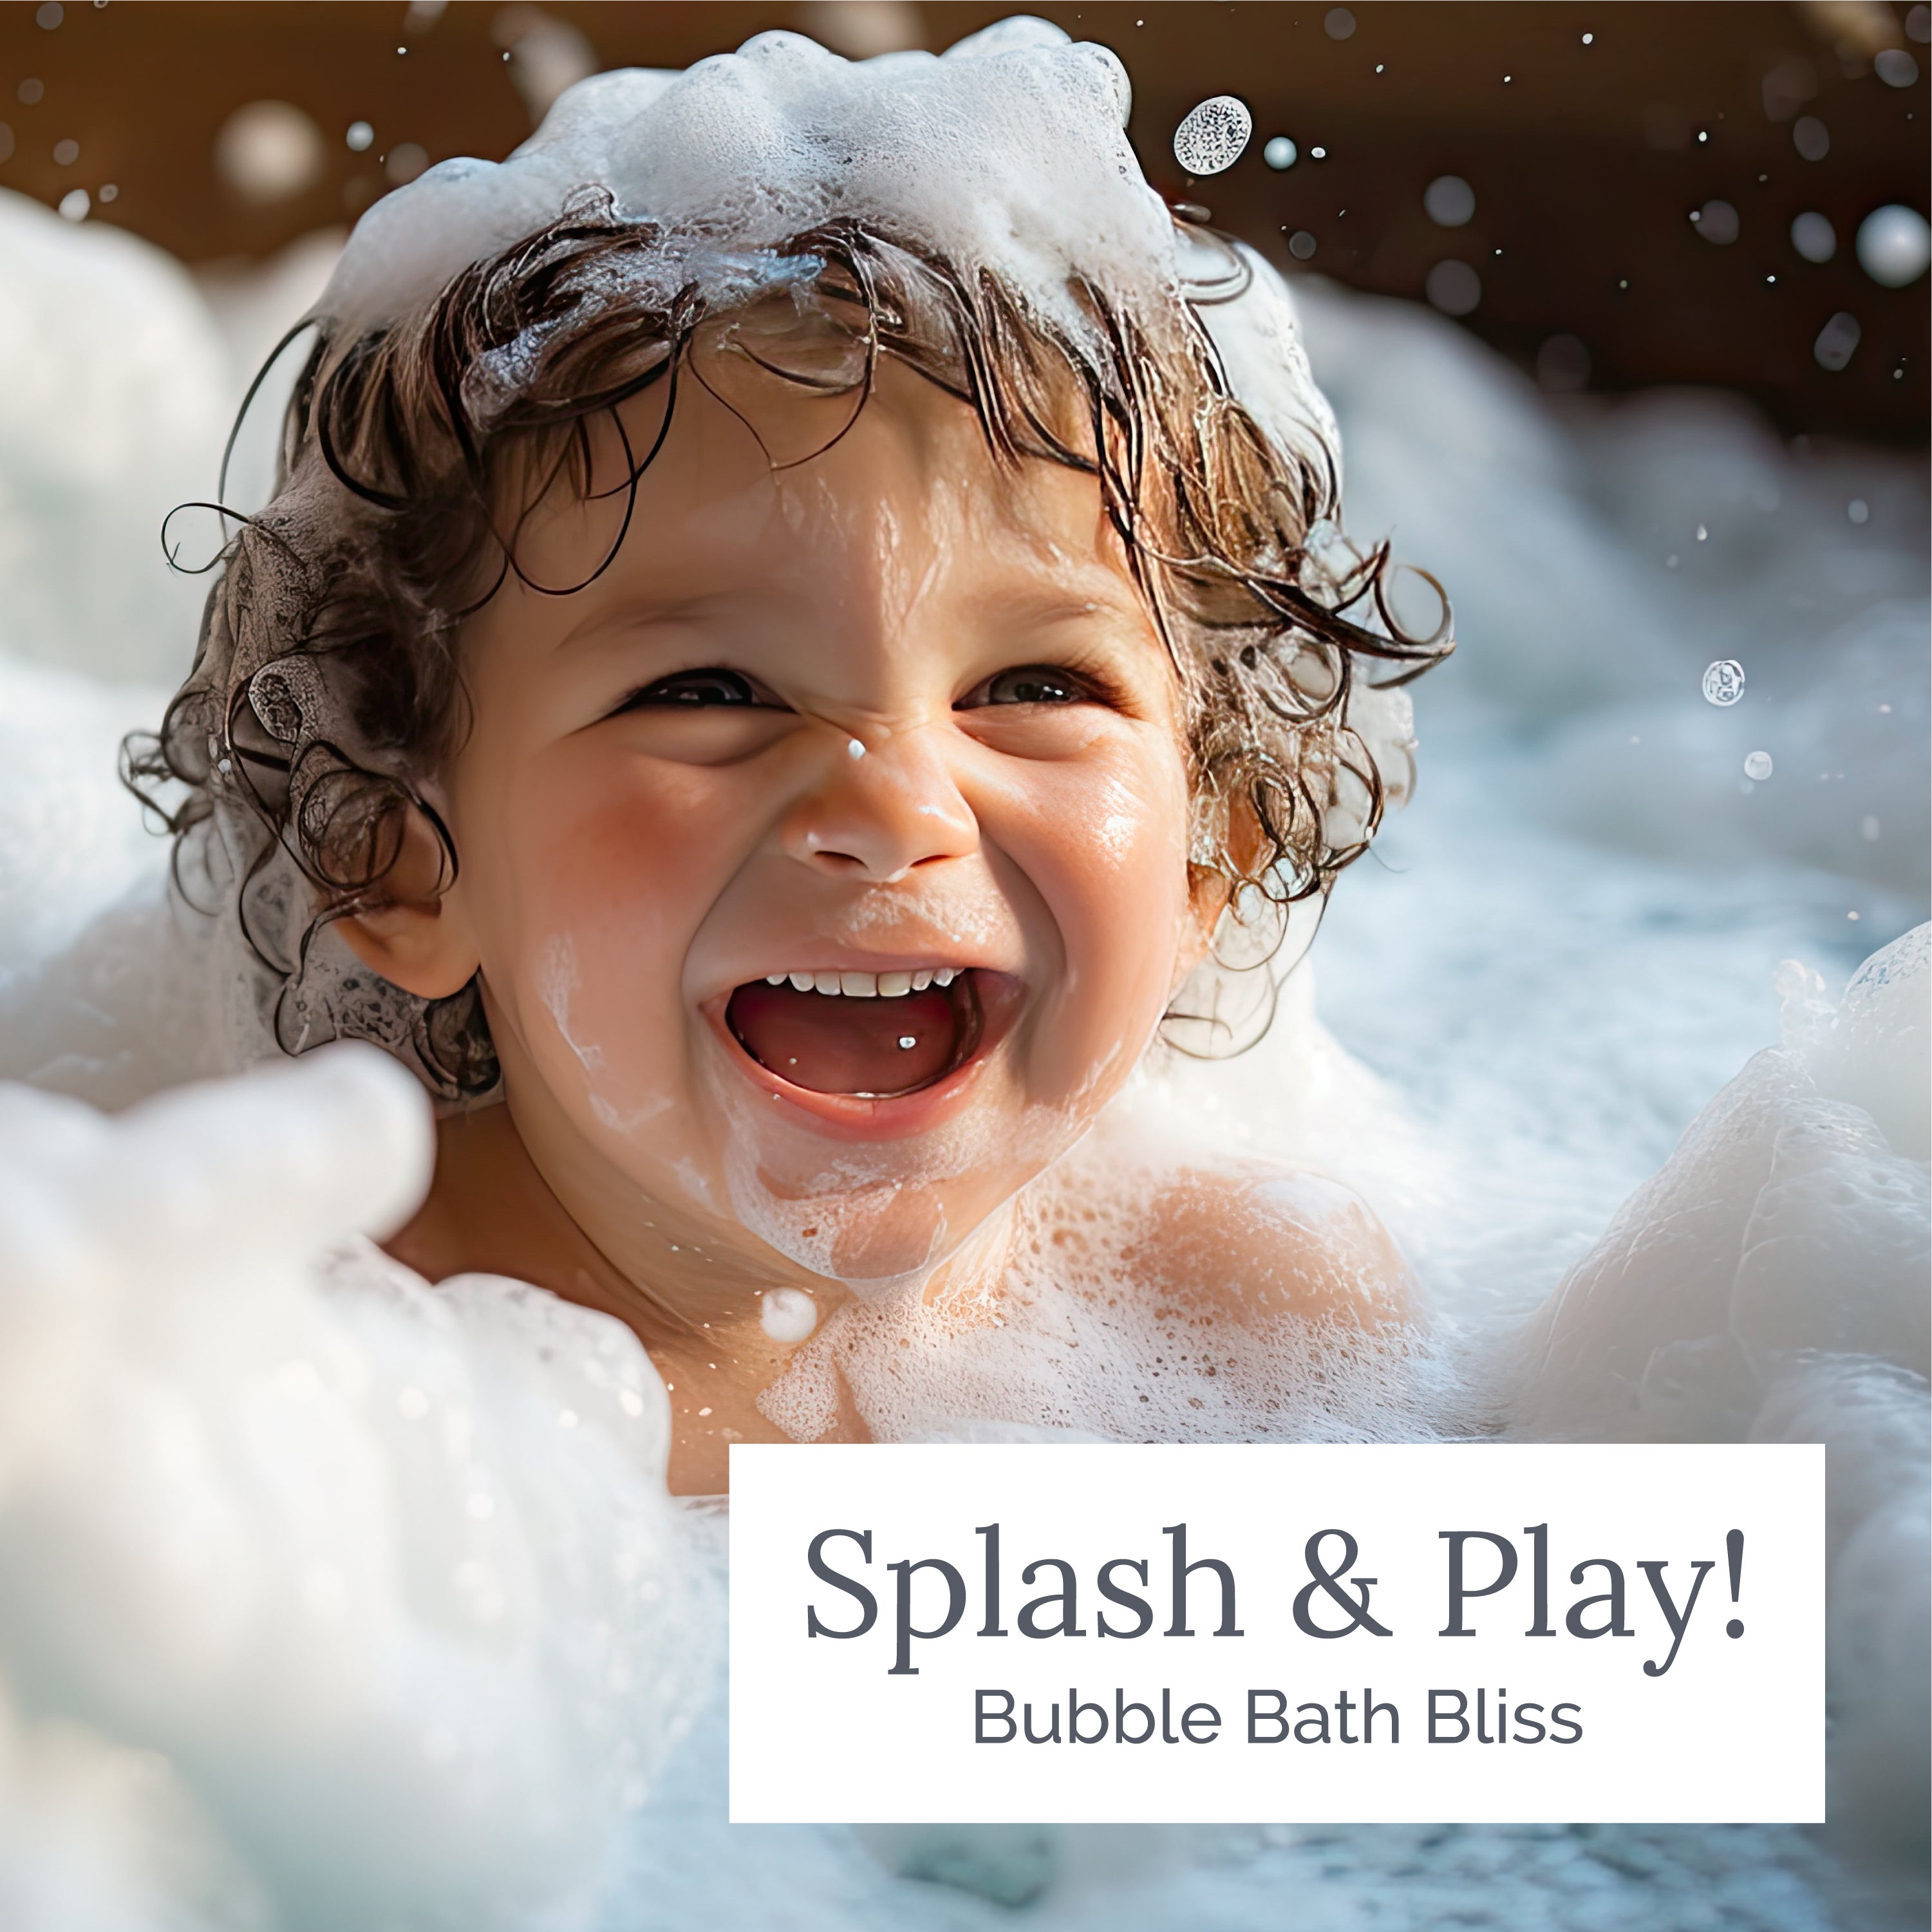 Baby Shampoo, Soap, and Body Wash - Natemia